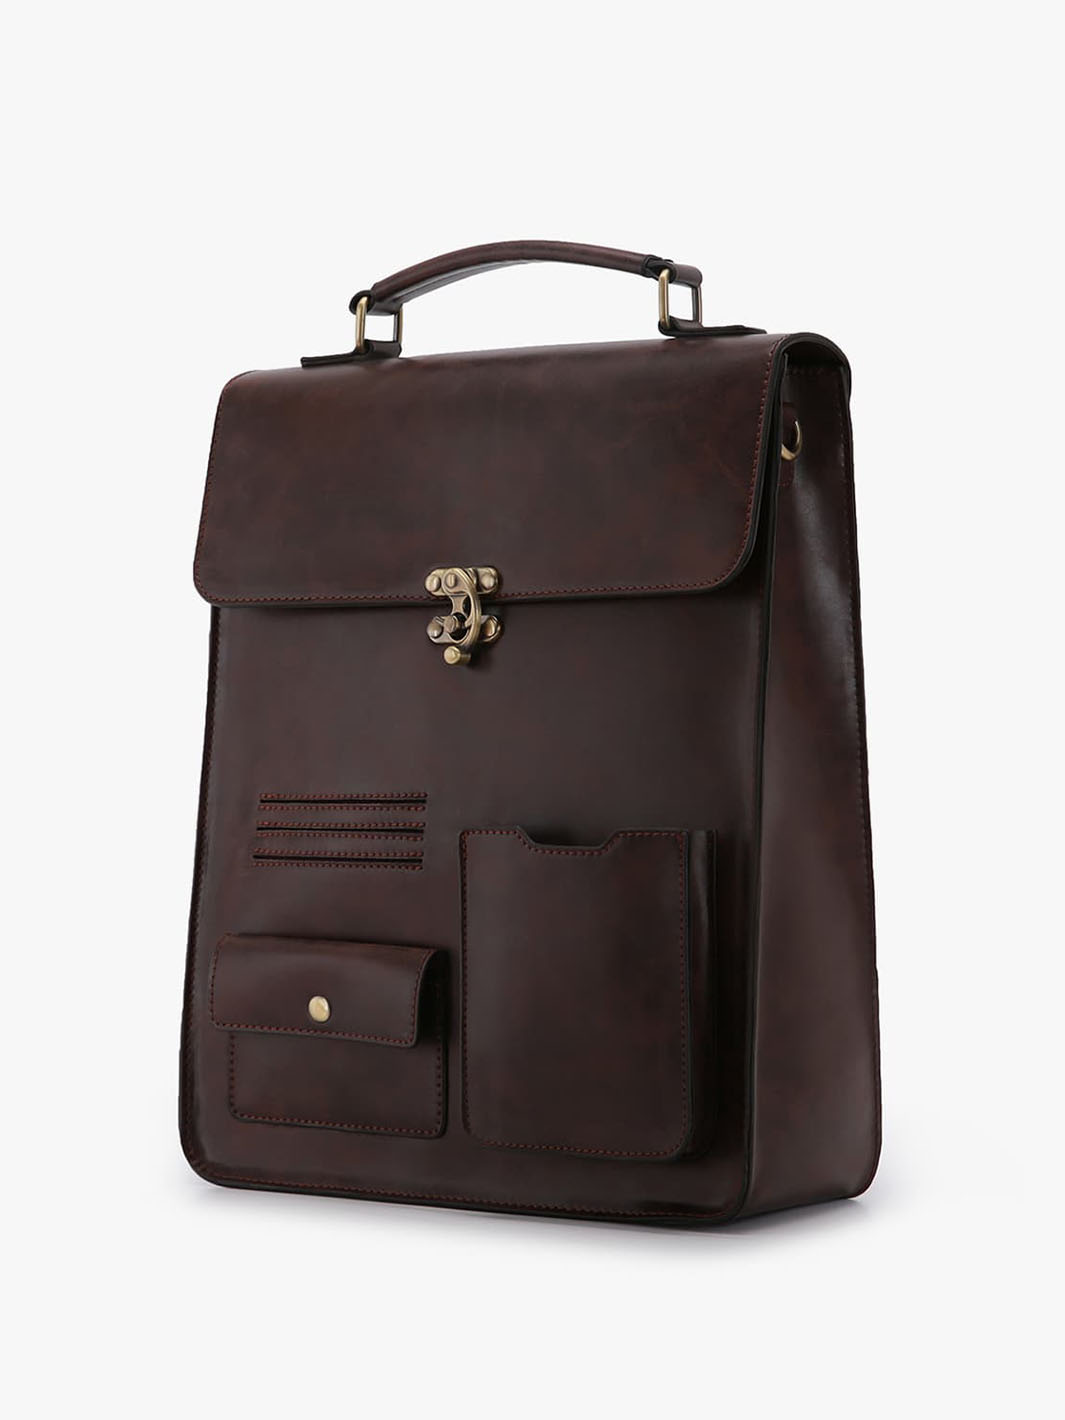 Leather backpack handbag for Women: Stylish & Practical